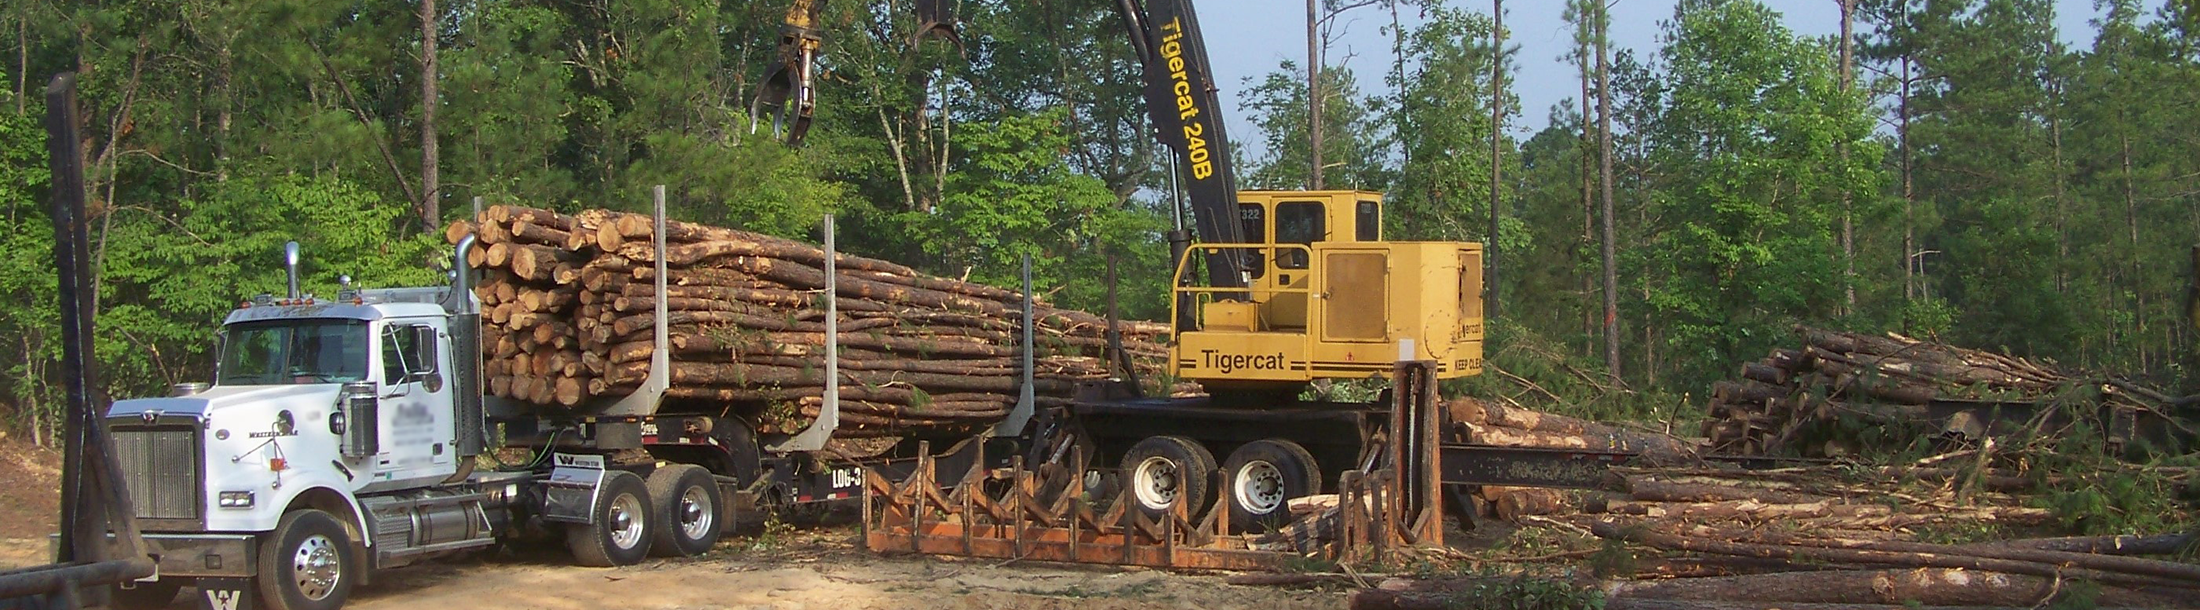 Log truck drivers operate heavy trucks to transport logs